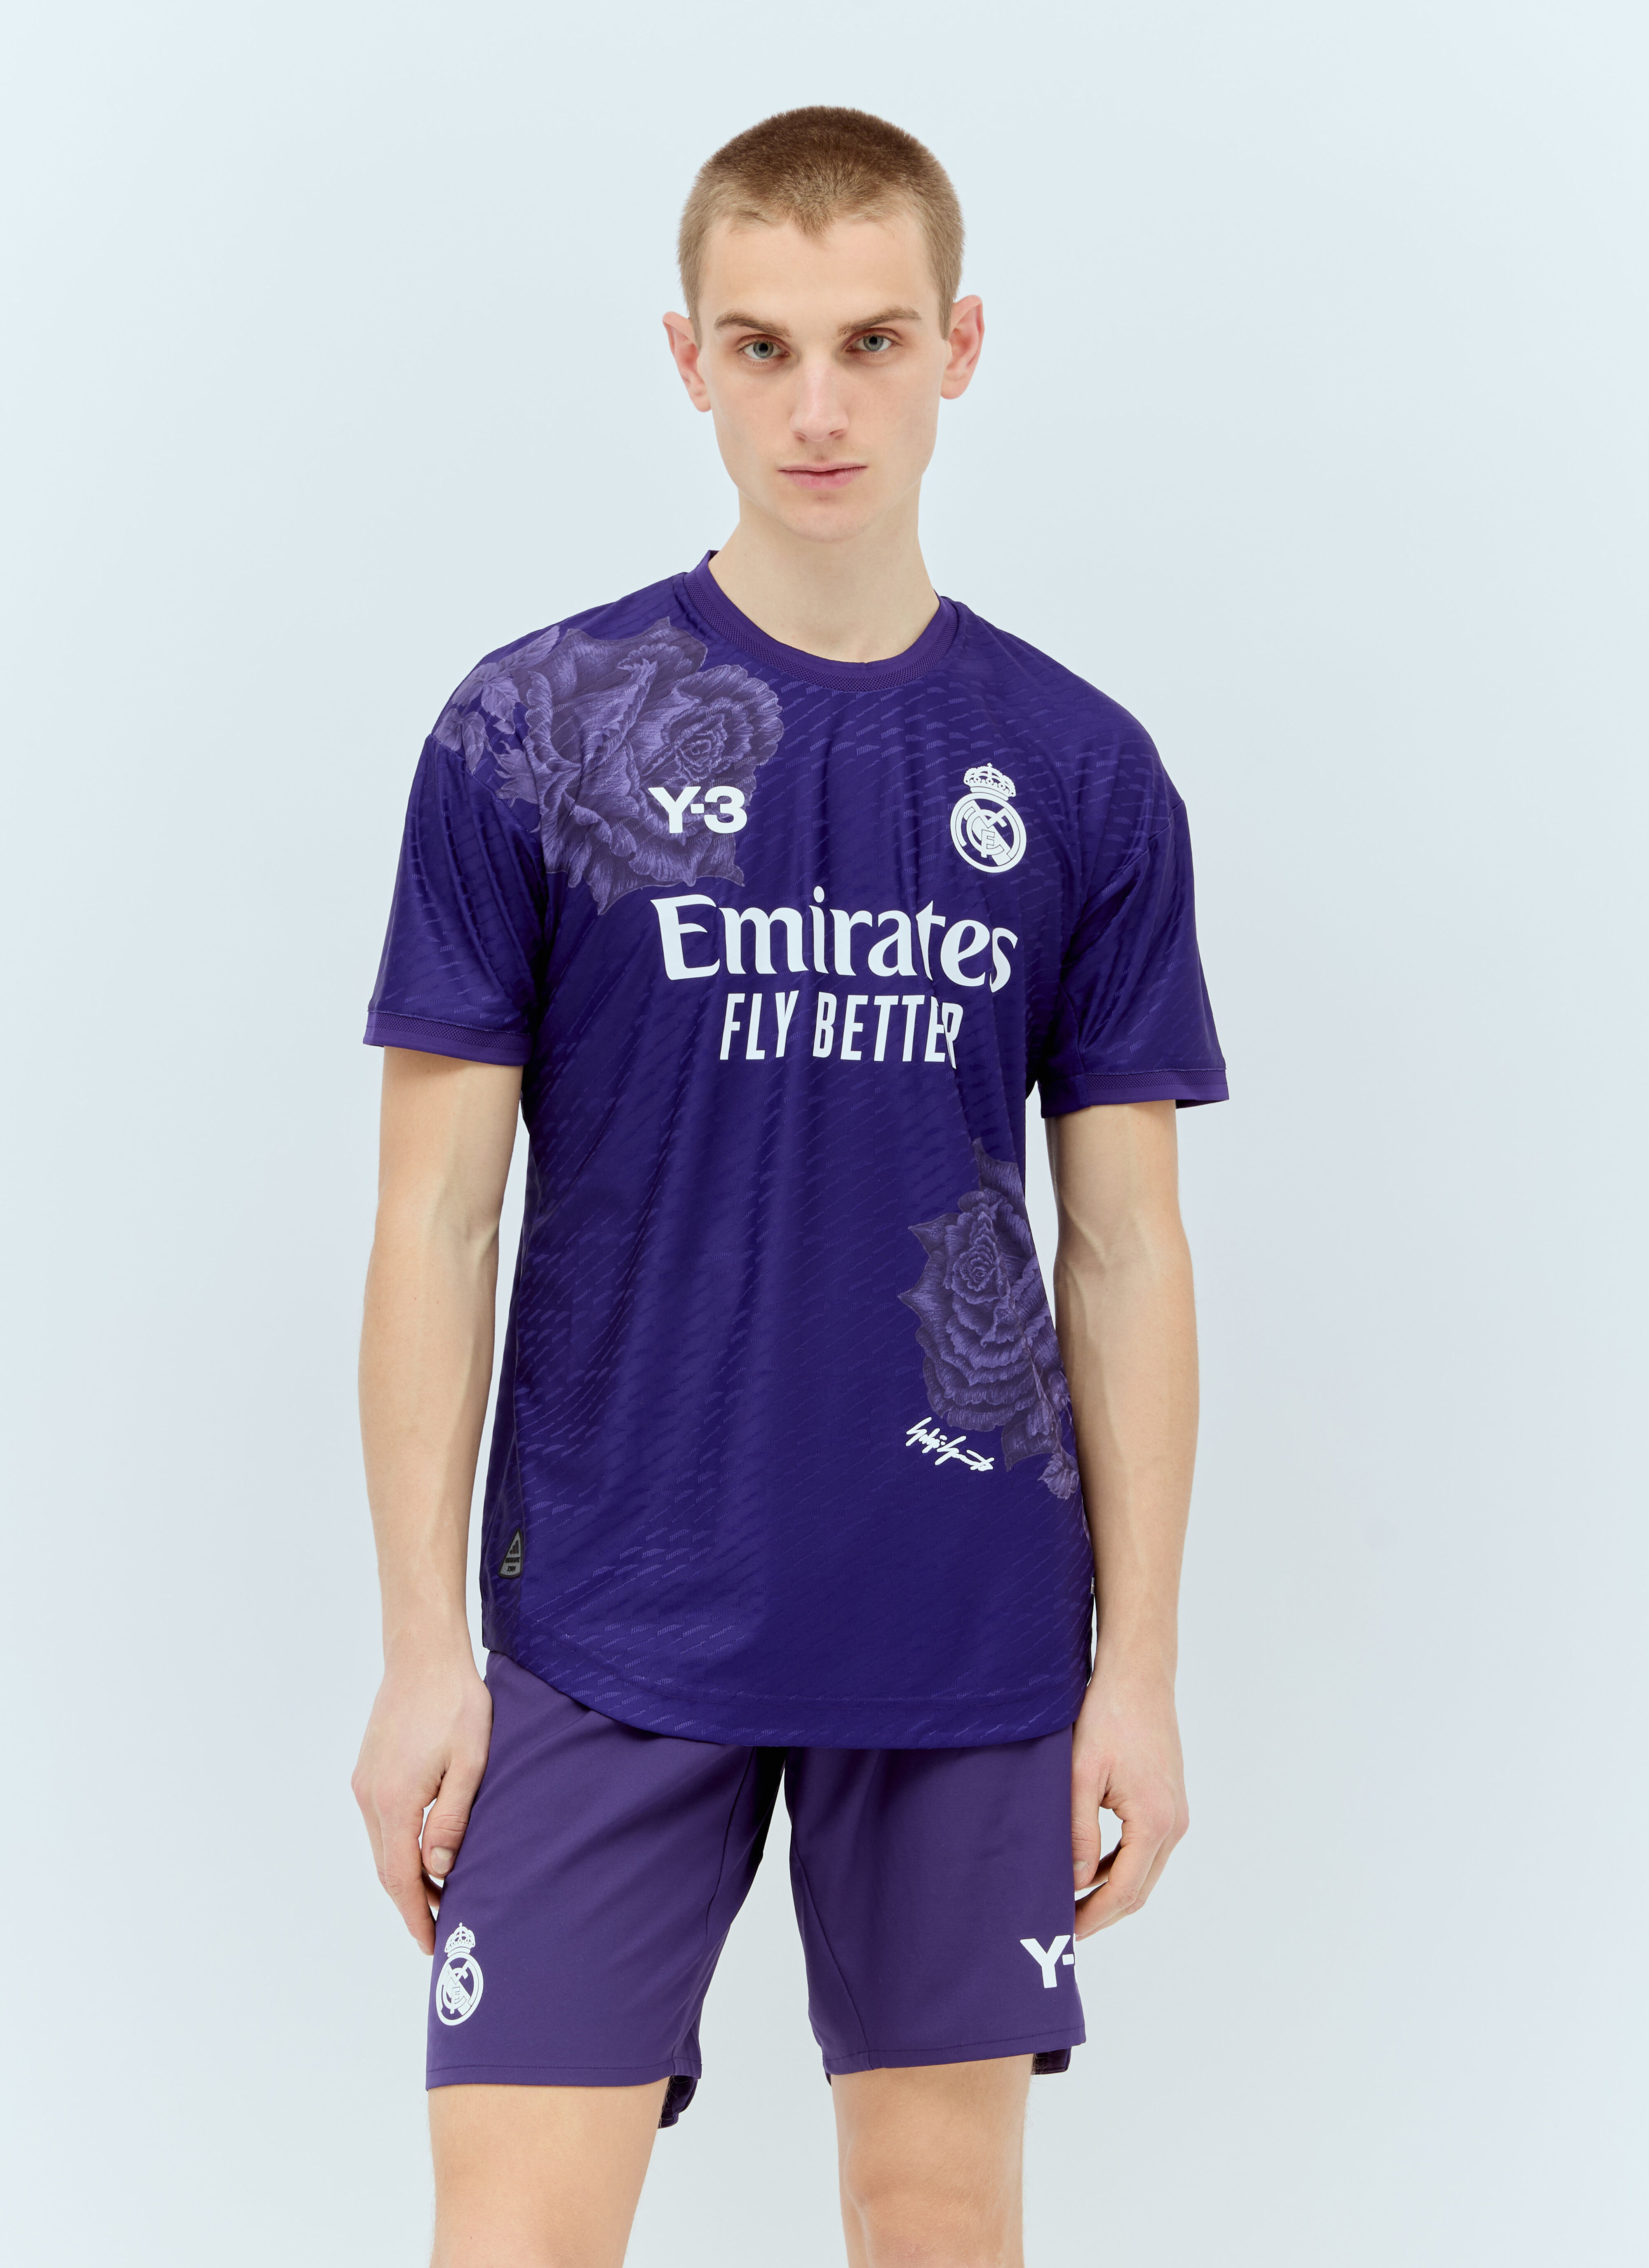 Y-3 x Real Madrid Logo Applique Jersey T-Shirt Black rma0156014